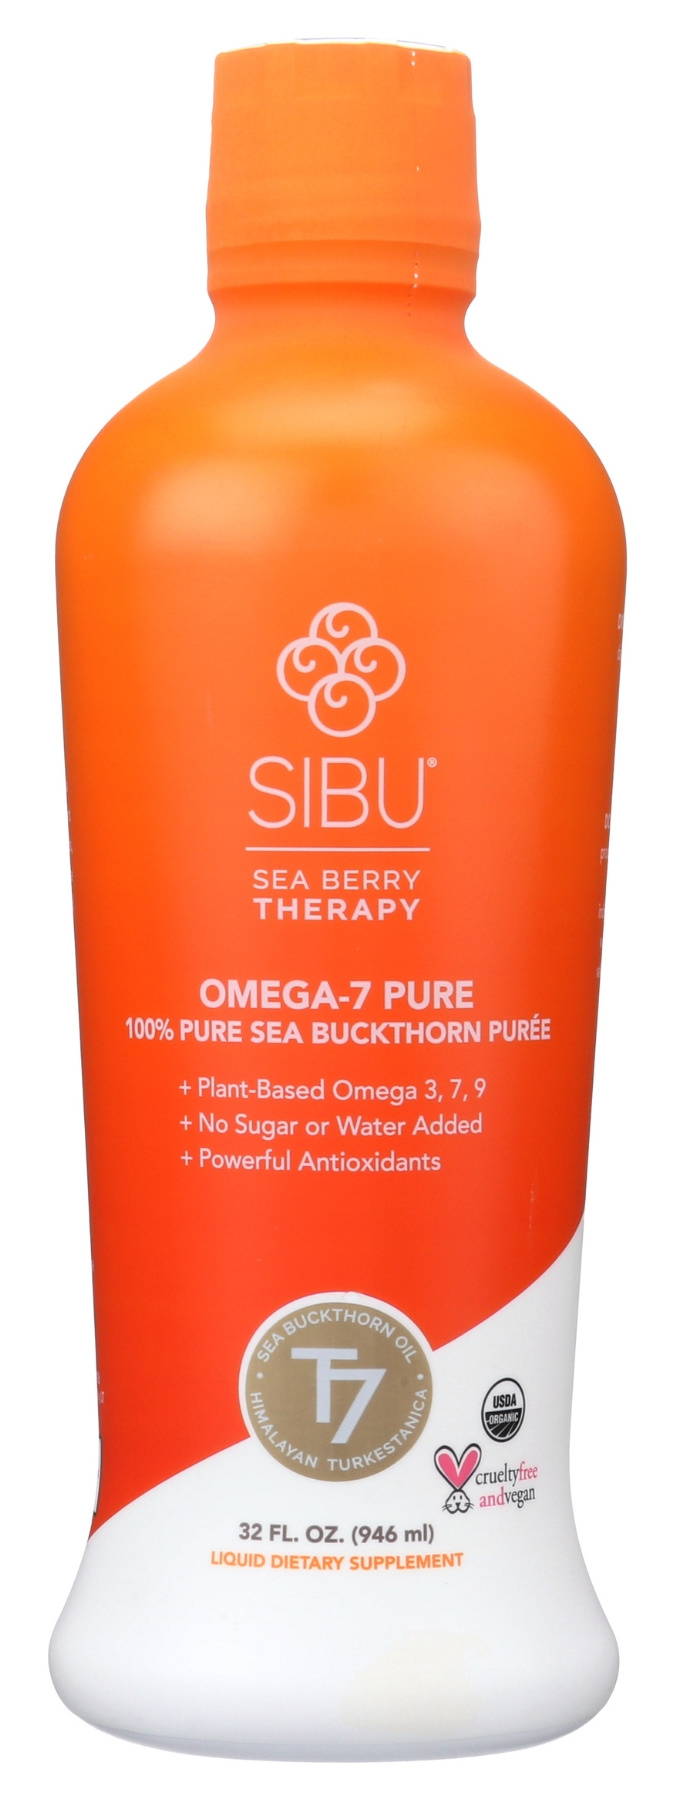 Omega 7 Pure - world's most potent omega 7